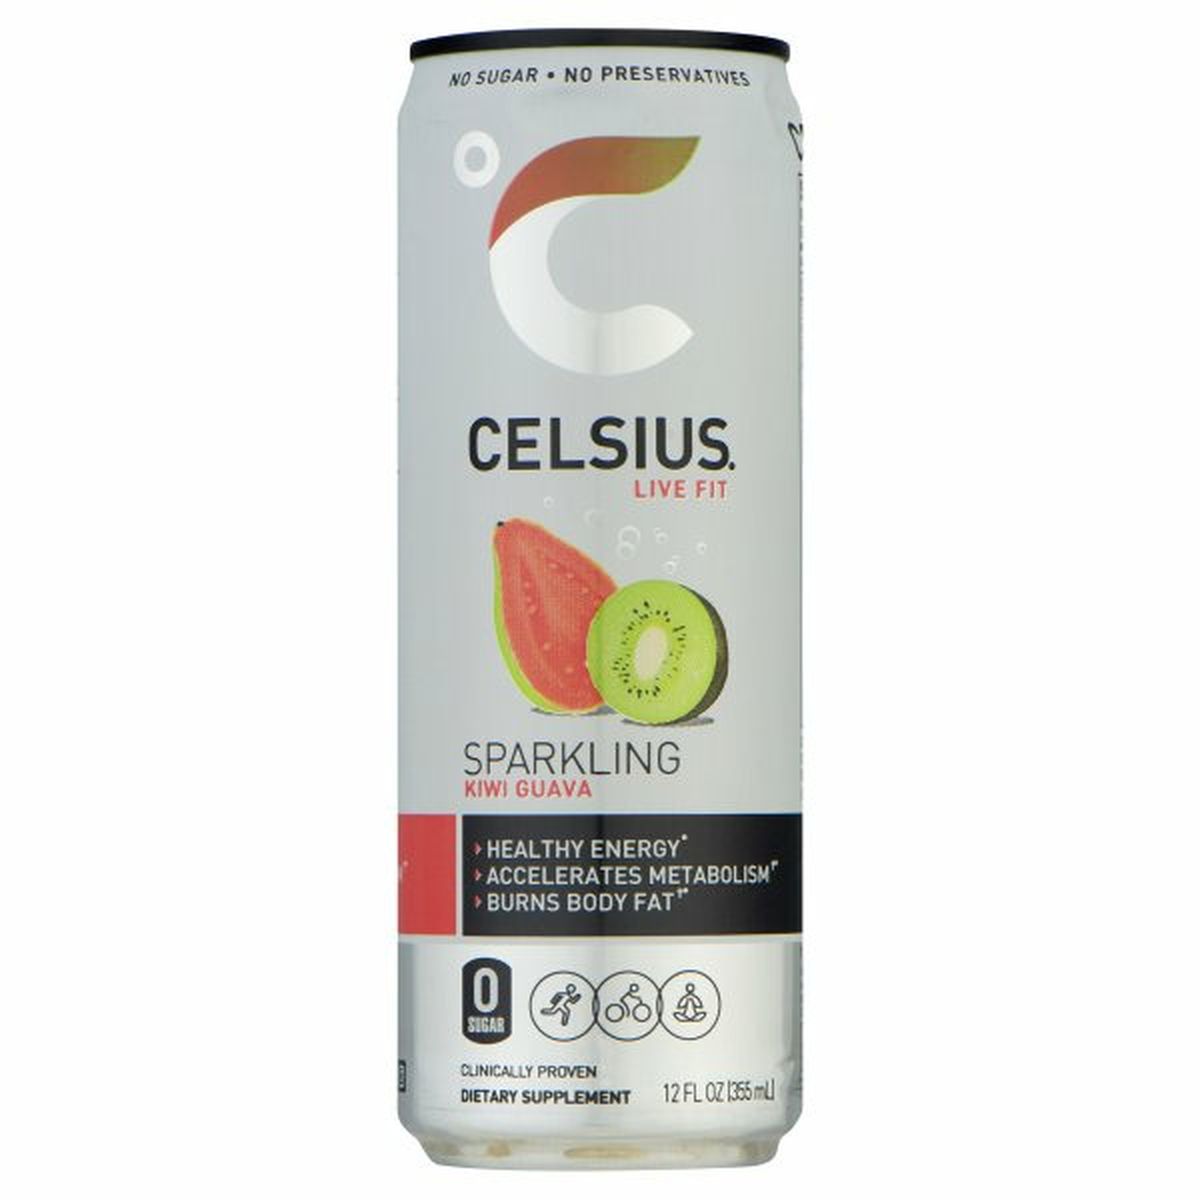 Calories in CELSIUS Live Fit Sparkling Drink, Kim Guava